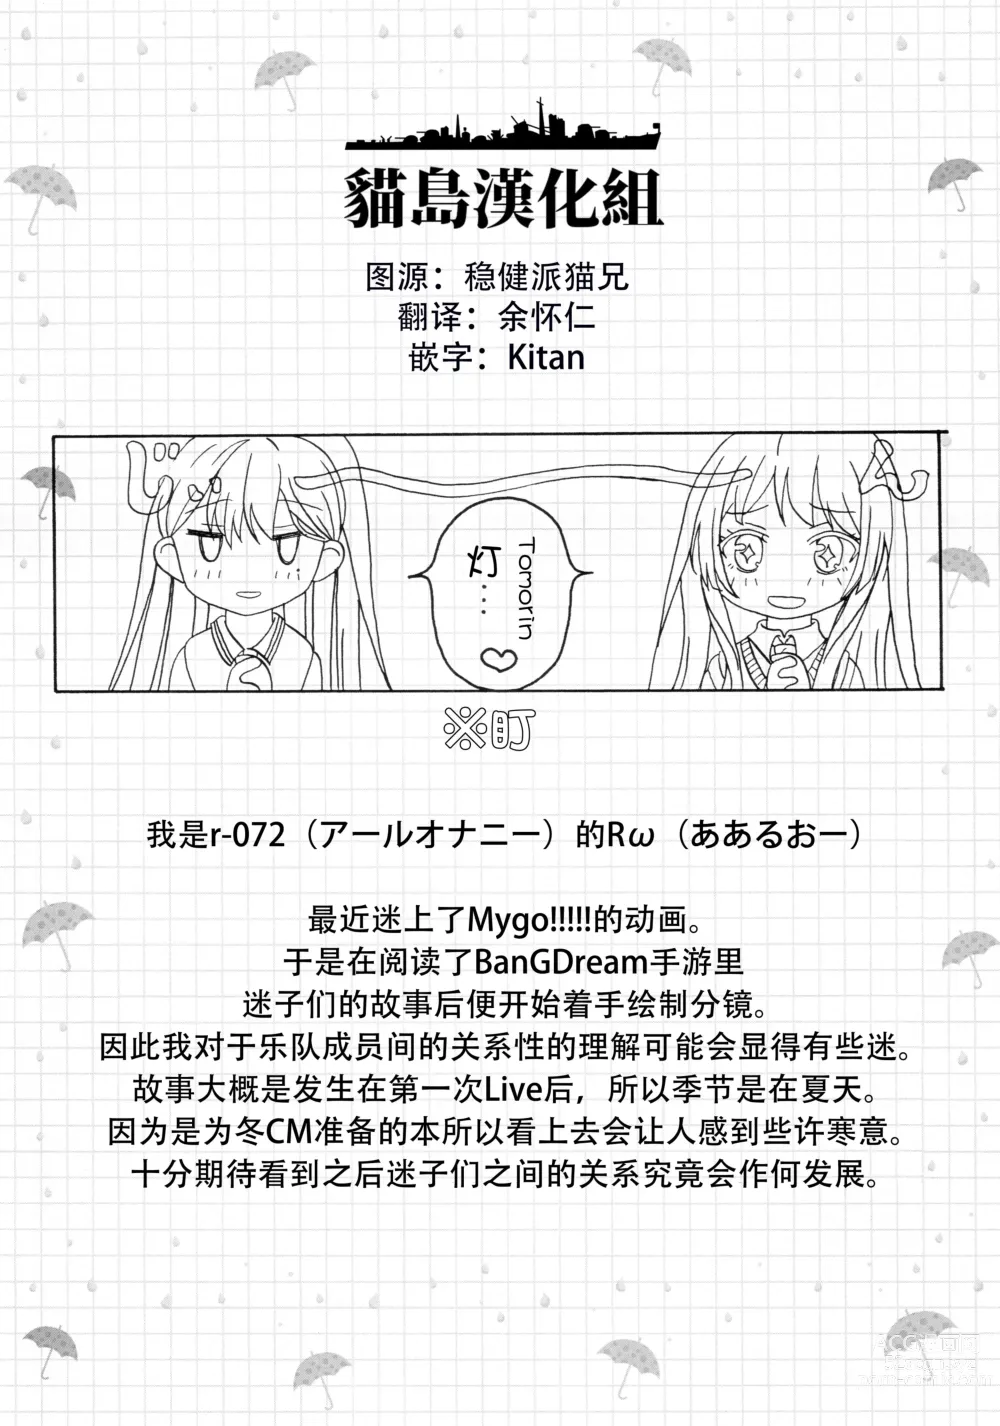 Page 3 of doujinshi C103 Omake